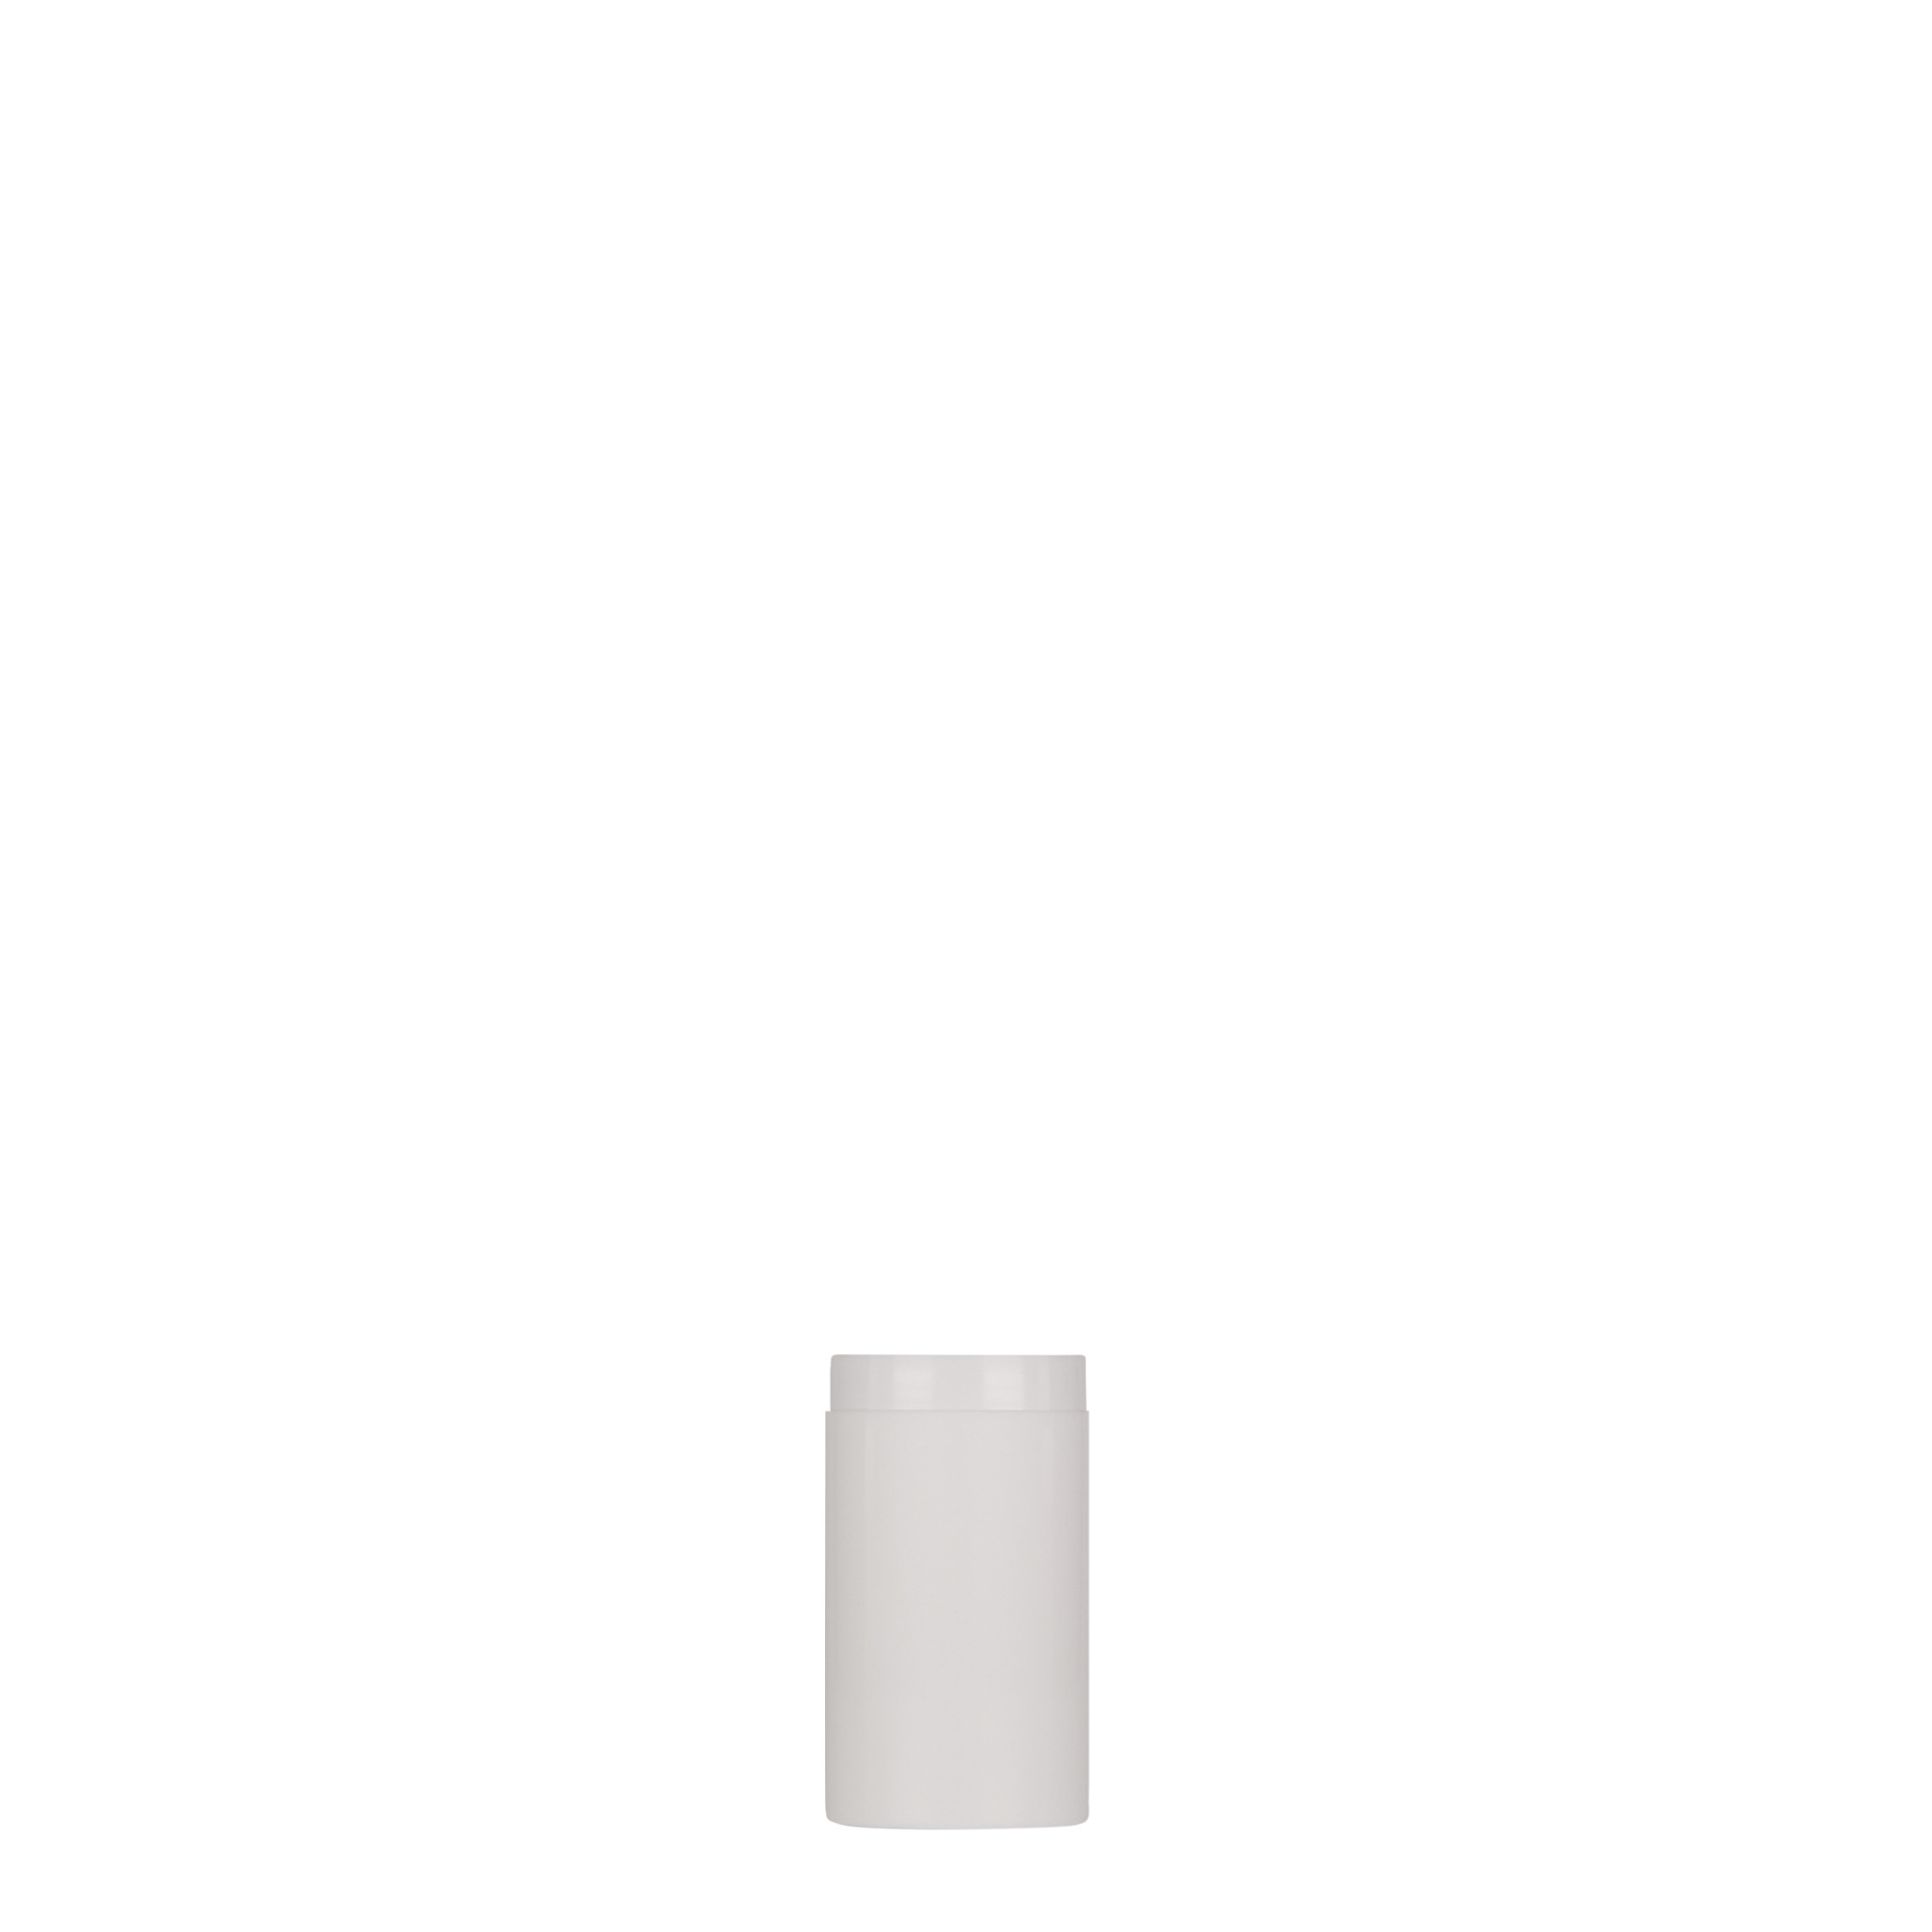 15 ml airless dispenser 'Micro', PP plastic, white